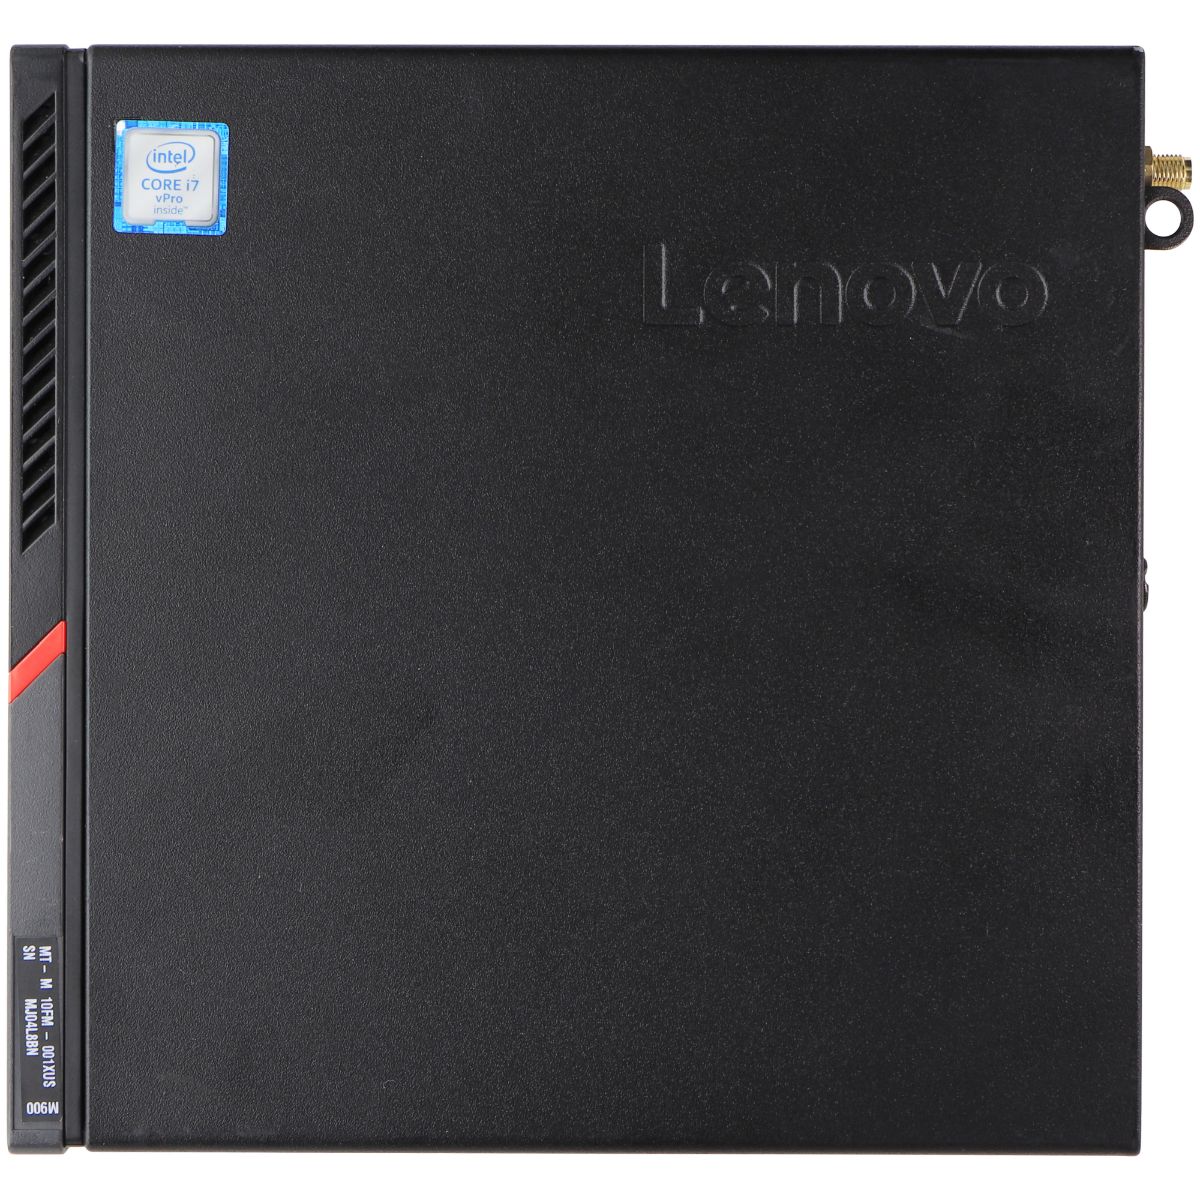 Lenovo ThinkCentre M900 Desktop (001XUS) i7-6700T / HD 530 /500GB HDD/8GB PC Desktops & All-In-Ones Lenovo    - Simple Cell Bulk Wholesale Pricing - USA Seller